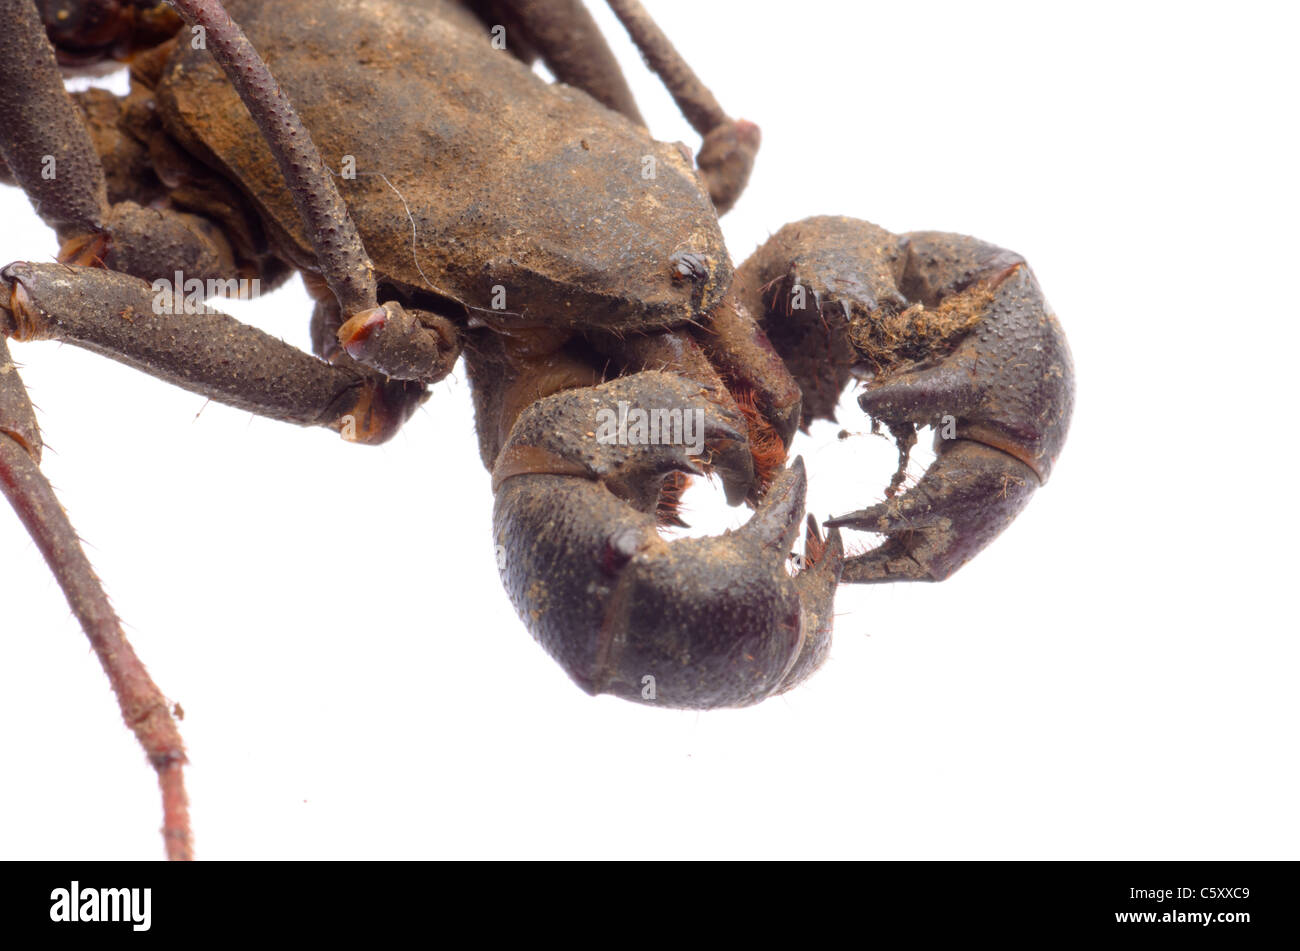 vinegaroon scorpion Stock Photo